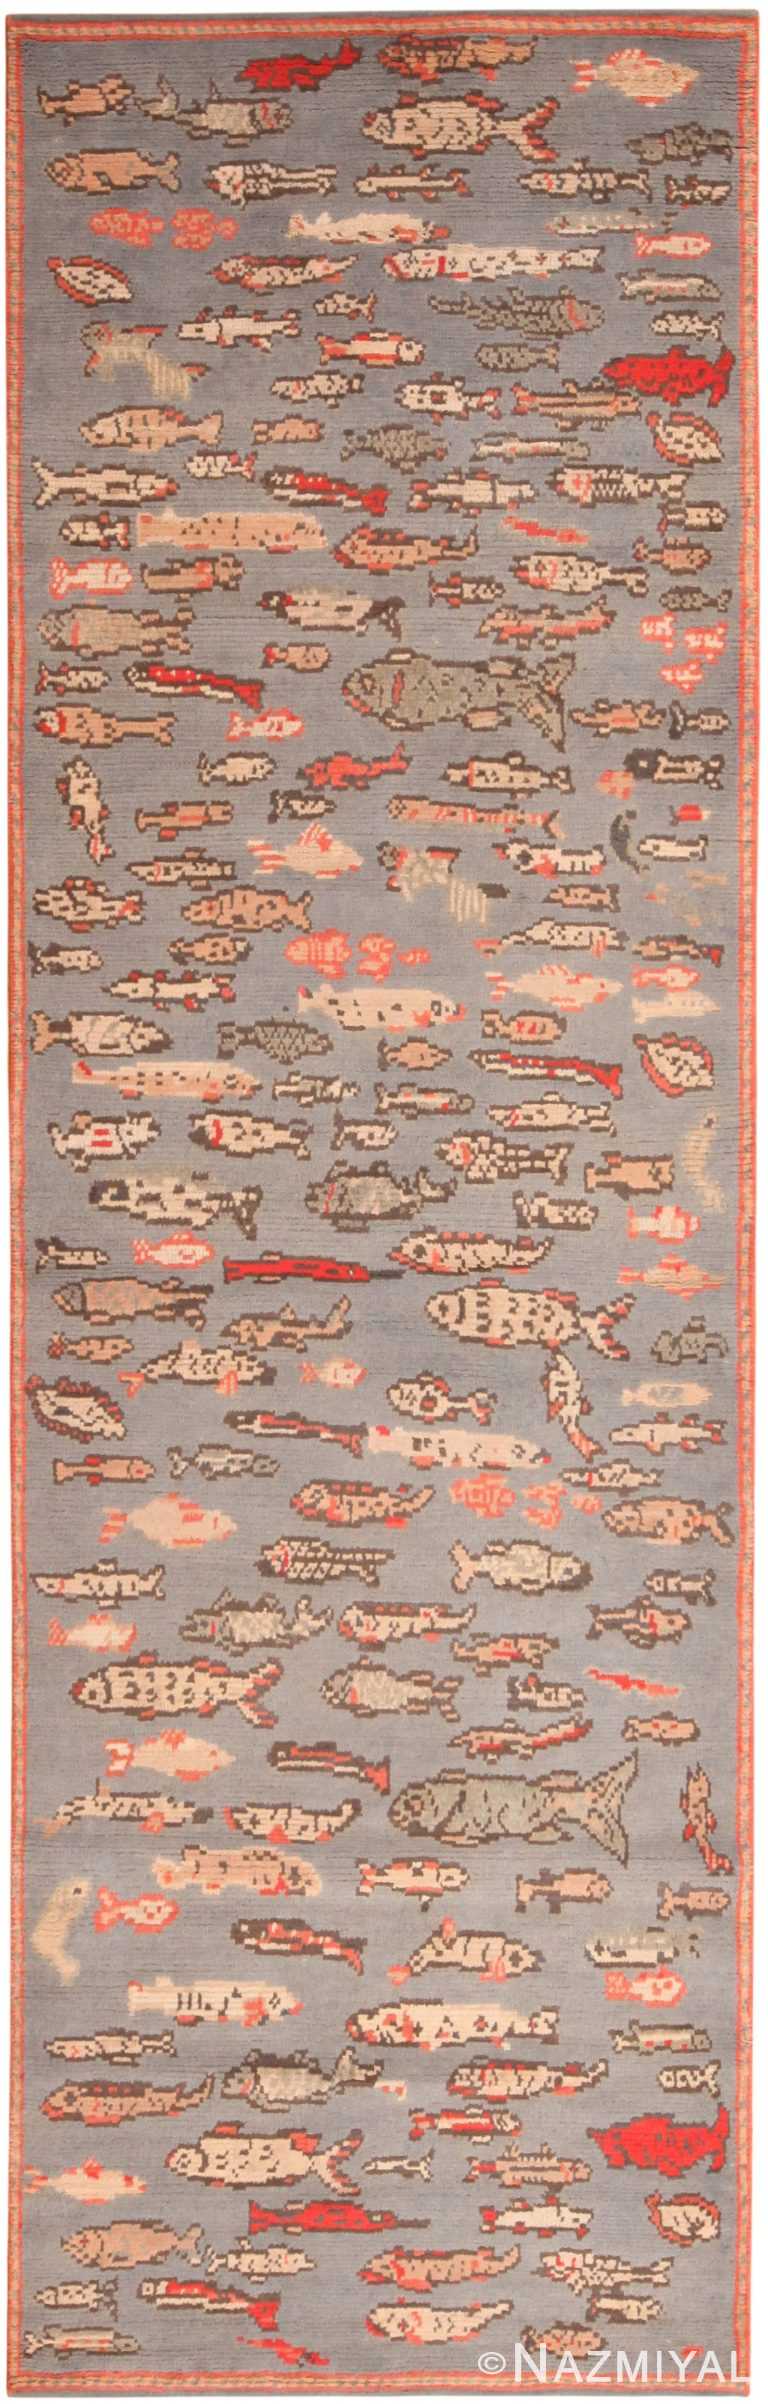 Modern Whimsical Fish Design Swedish Inspired Runner Rug 60910 by Nazmiyal Antique Rugs